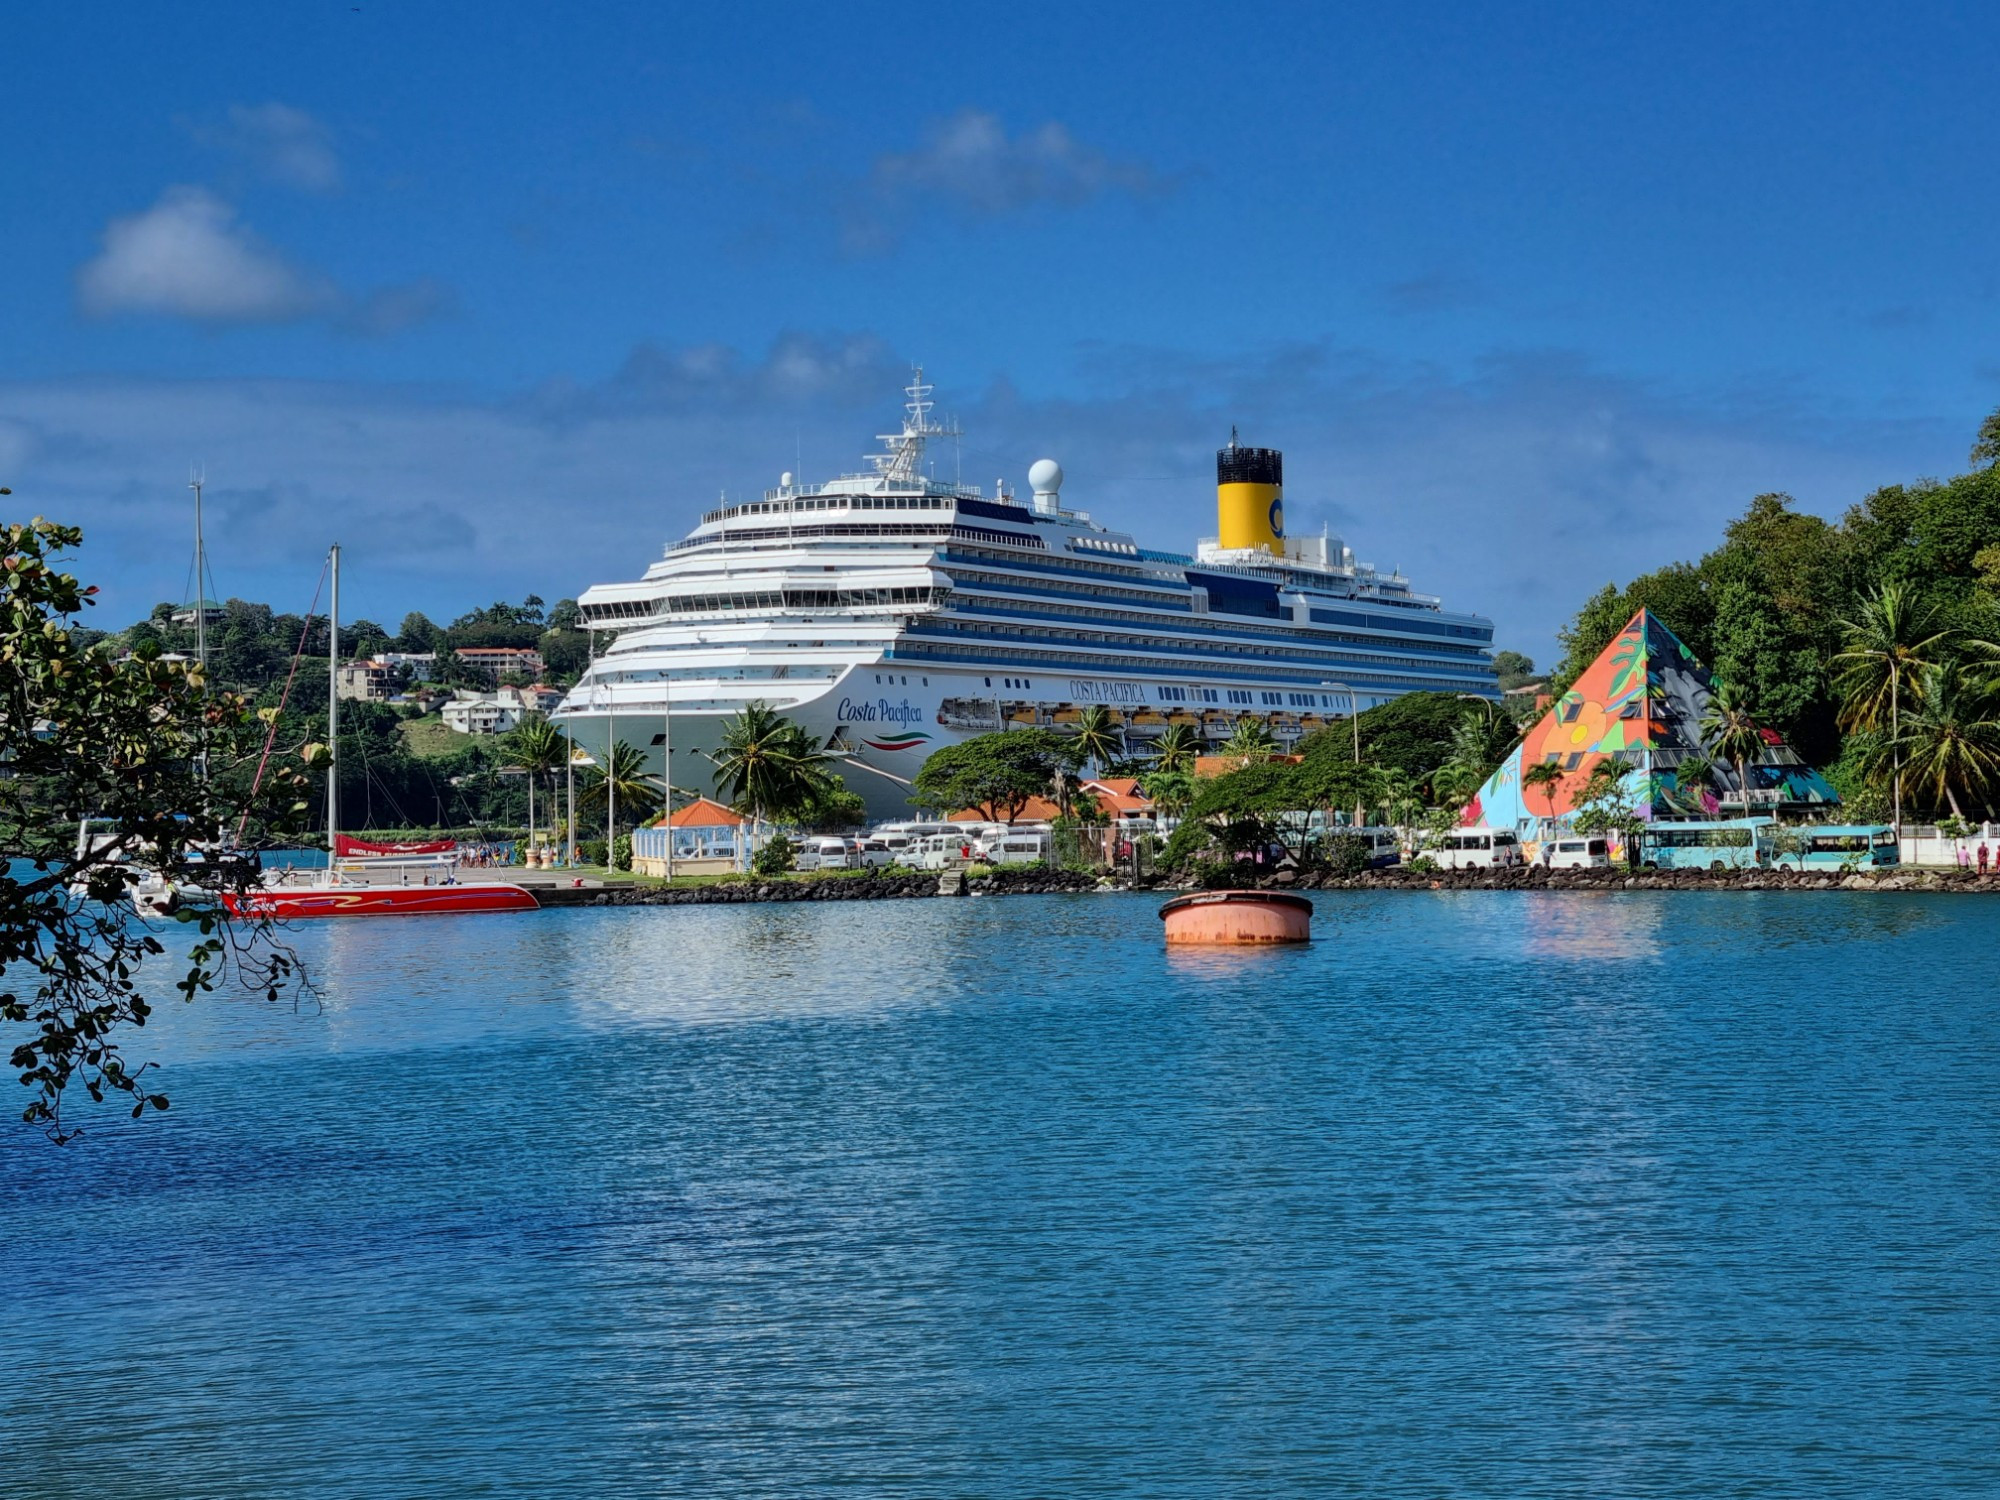 Cruise Pier Castries St. Lucia, Saint Lucia